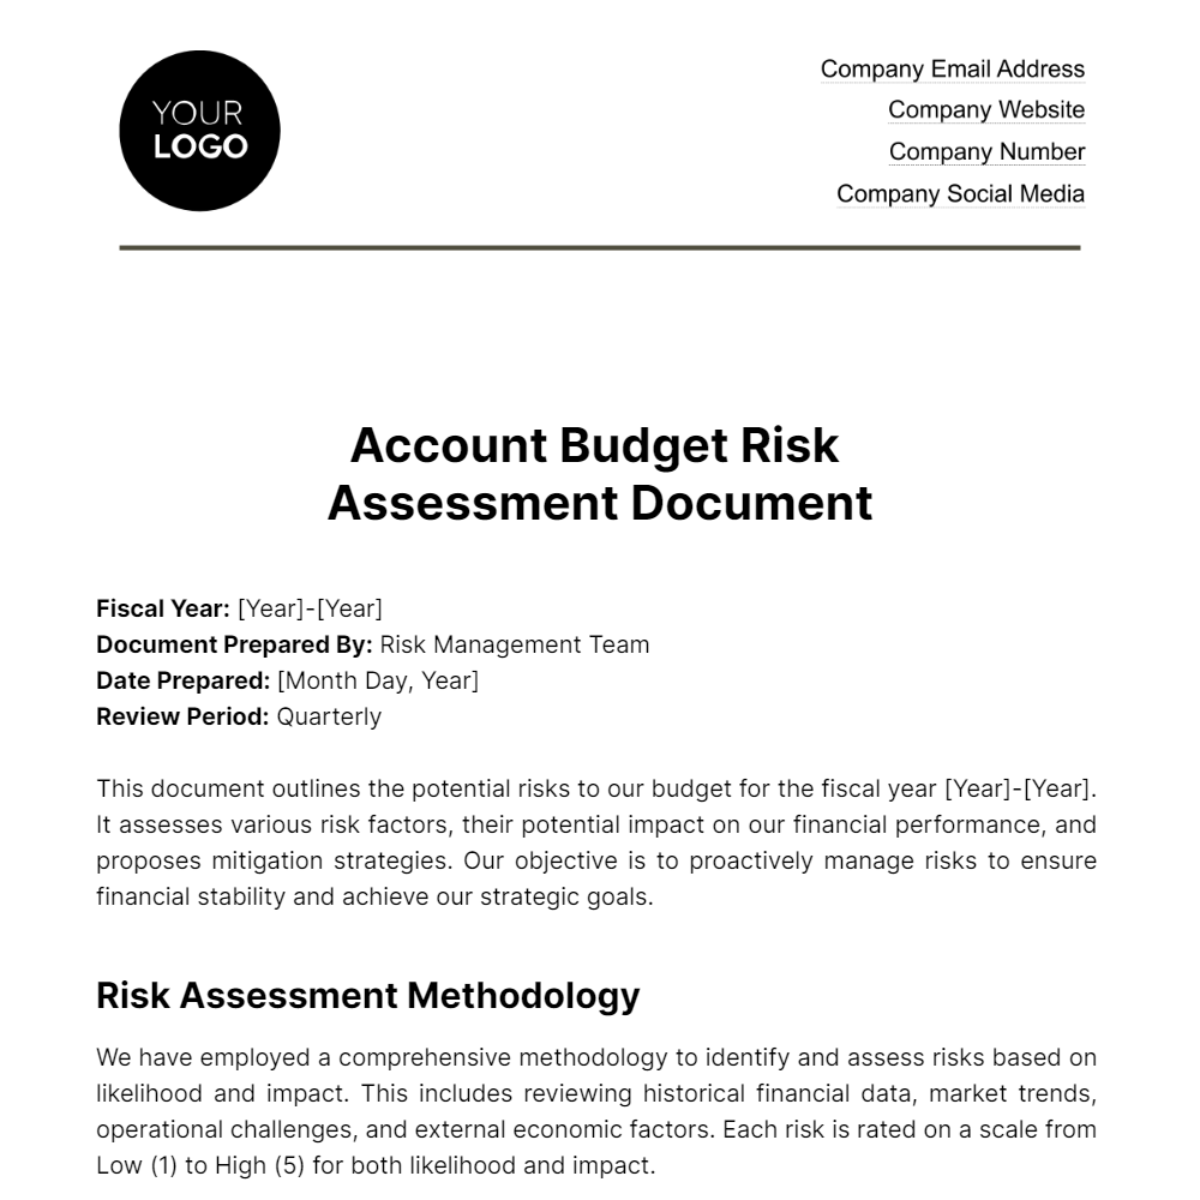 Account Budget Risk Assessment Document Template